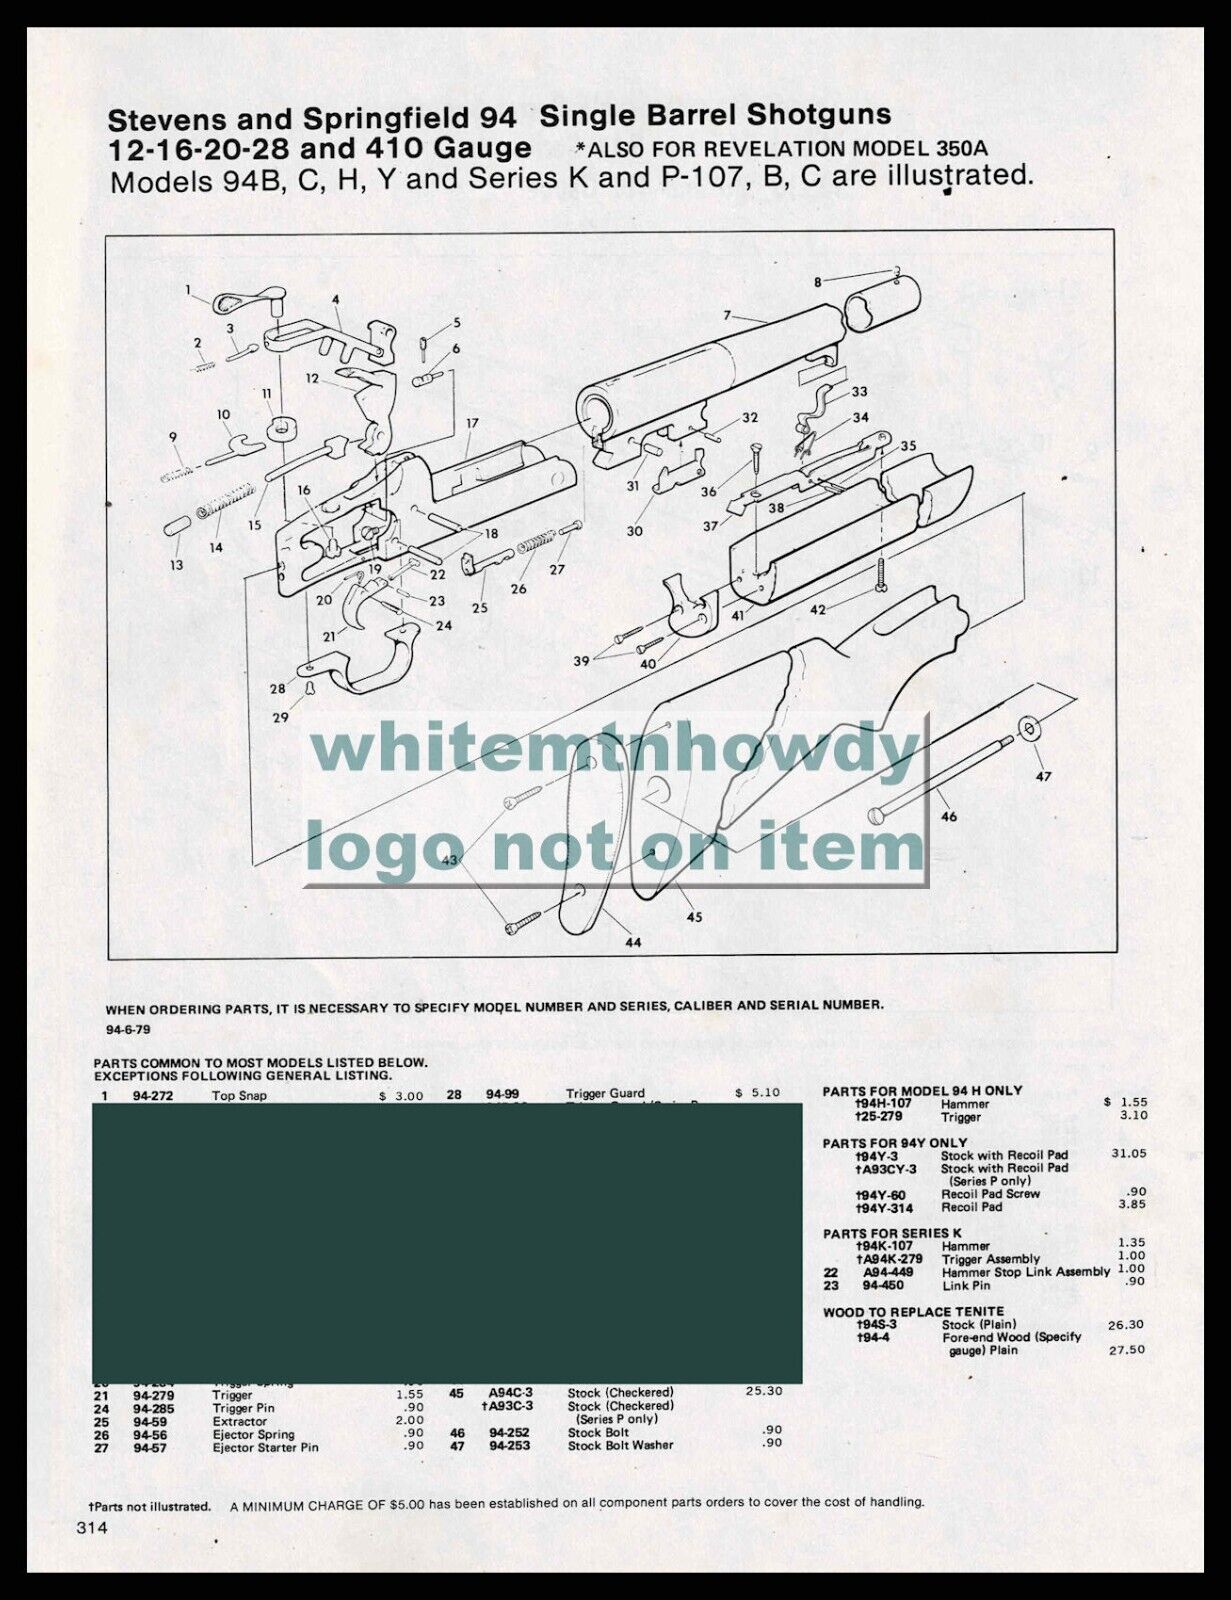 1984 STEV ENS and SPRINGFIELD 94 Single Barrel Shotguns  Schematic Parts List